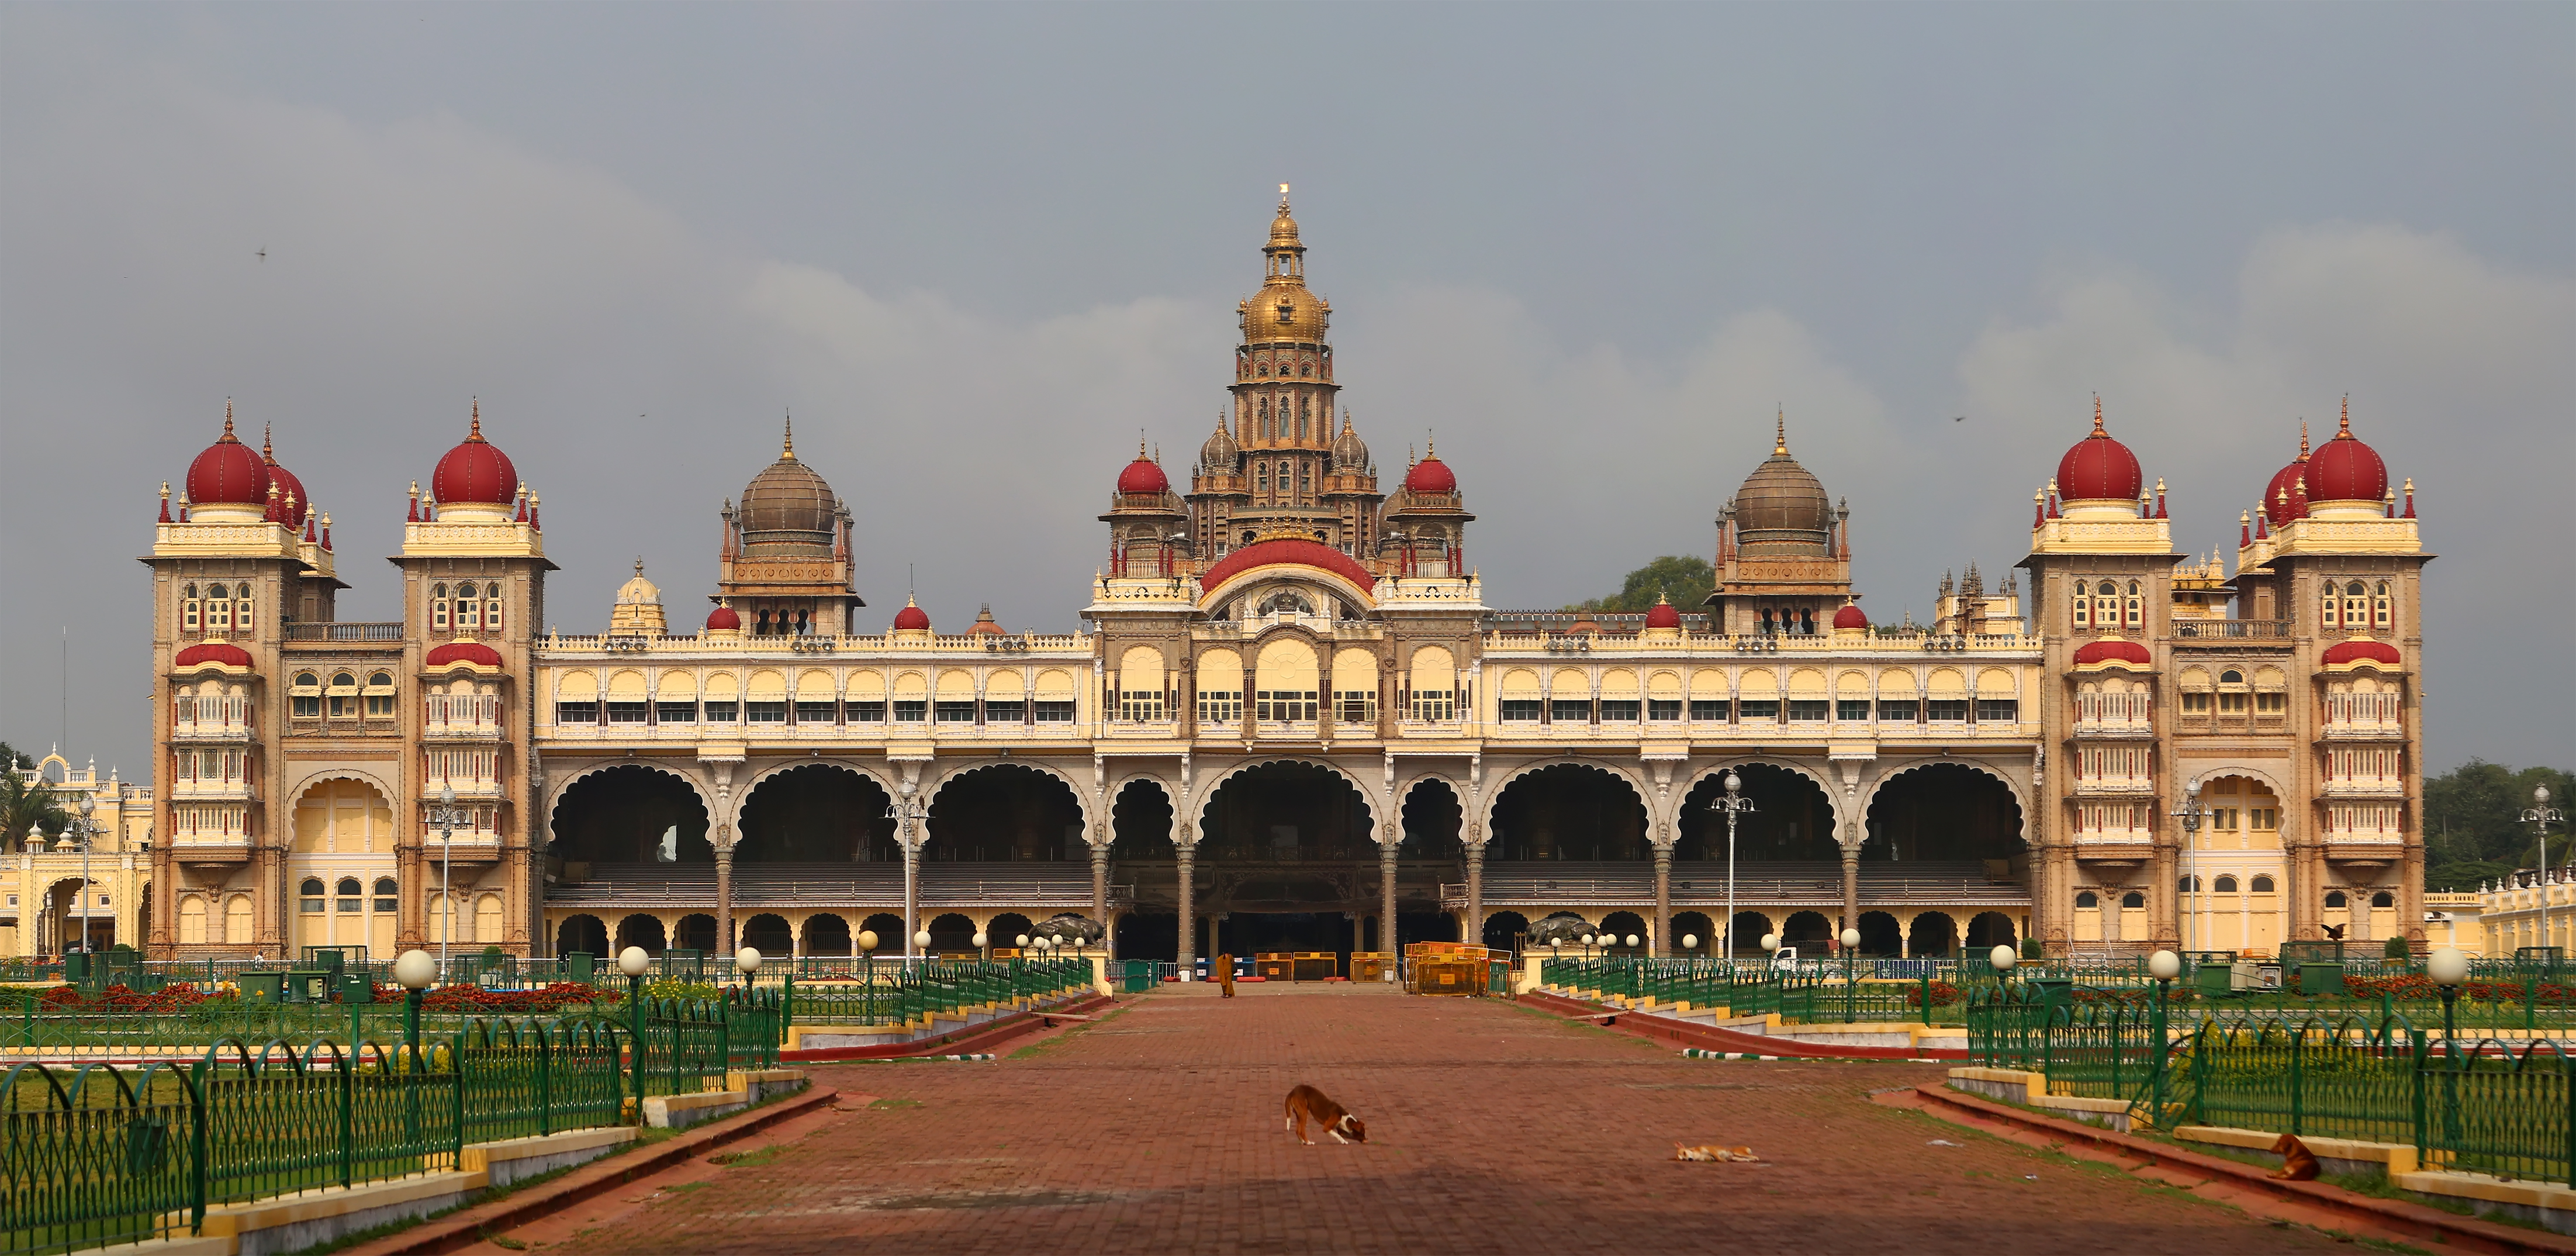 Kingdom of Mysore - Wikipedia